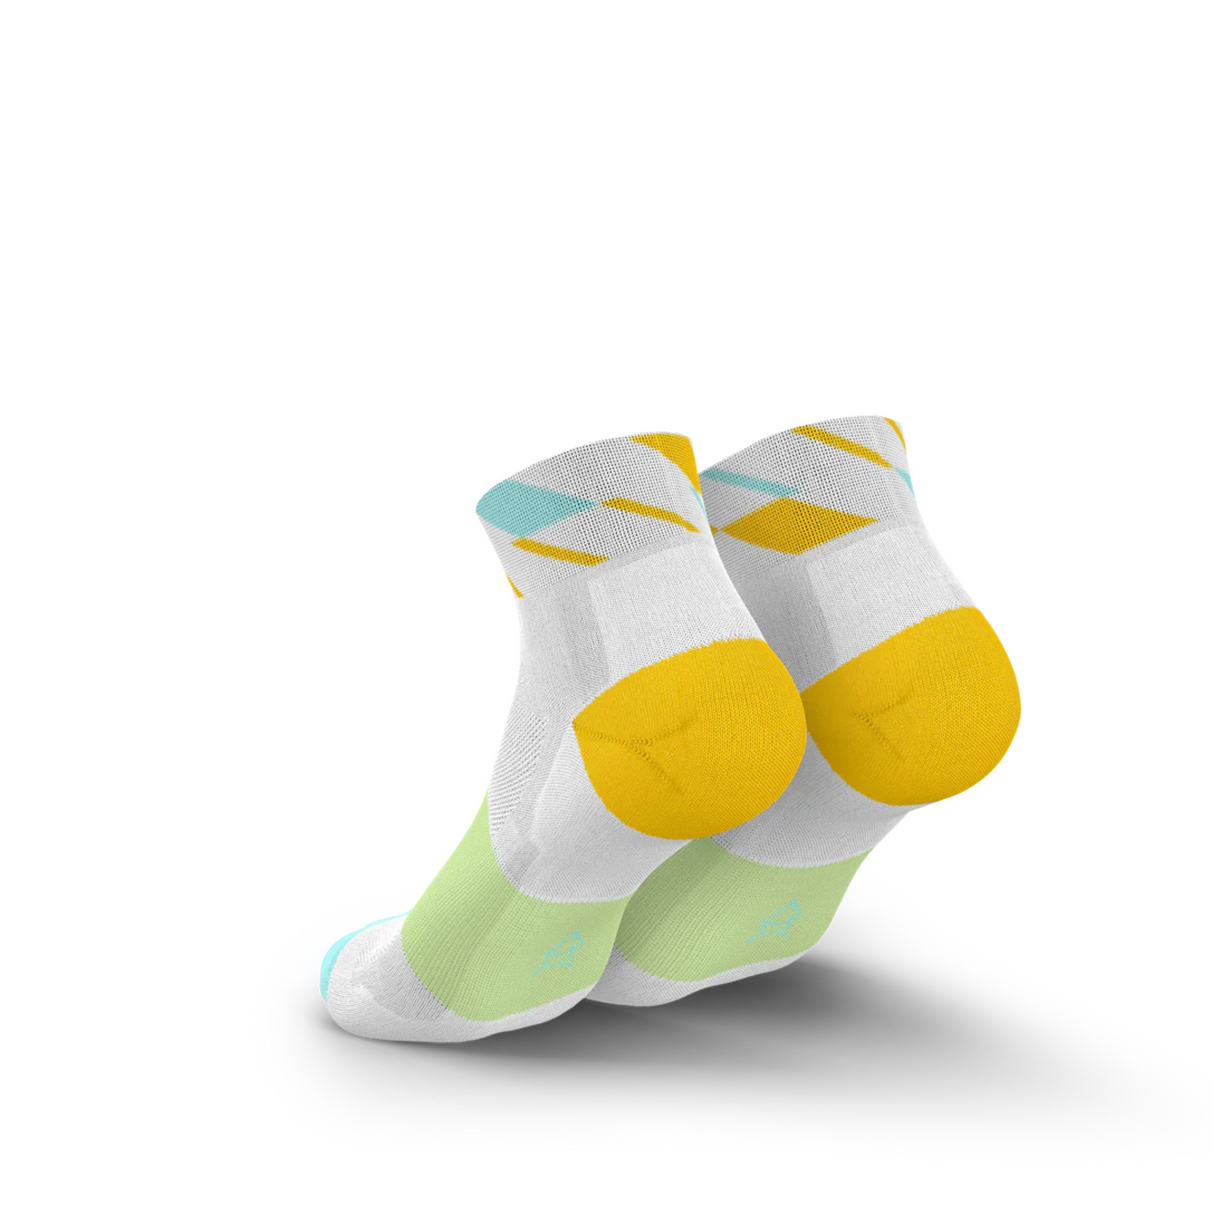 Incylence - Incylence Ultralight Angles Low-Cut Running Socks - Cam2 